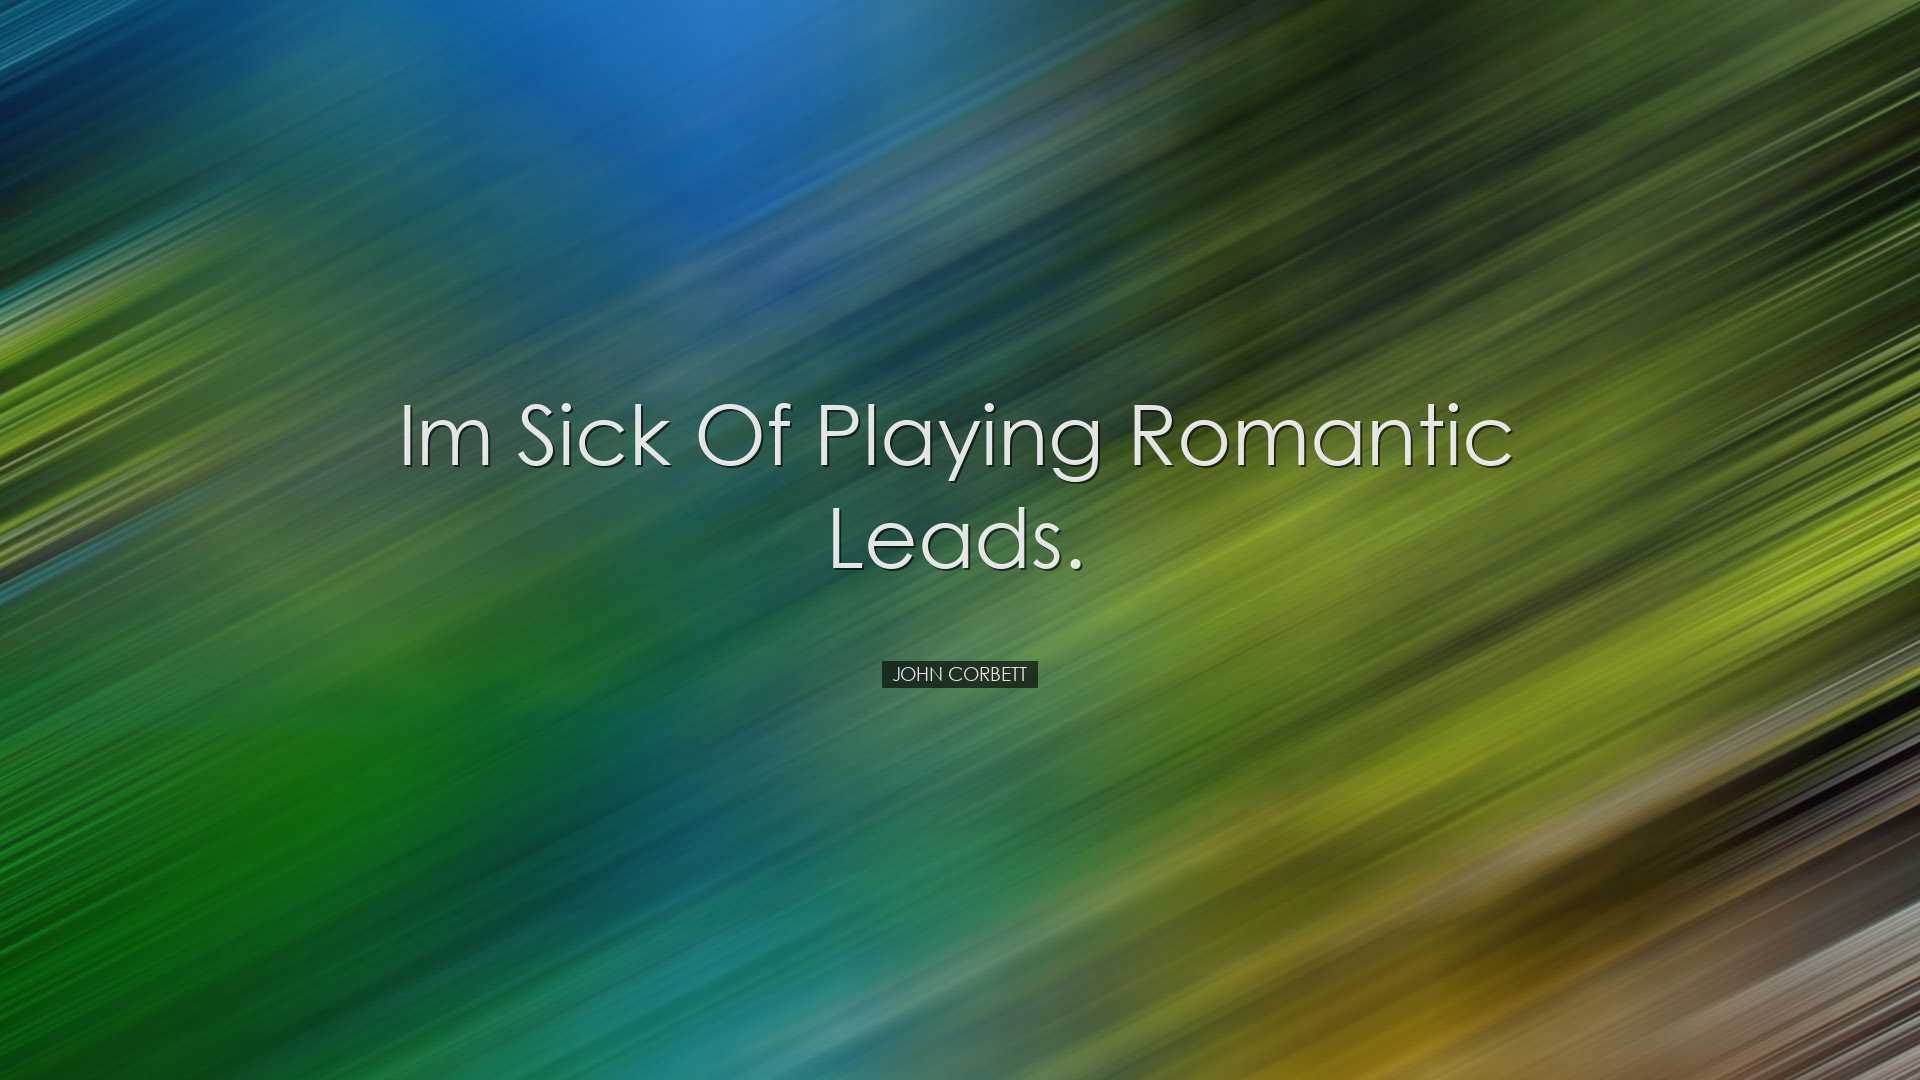 Im sick of playing romantic leads. - John Corbett